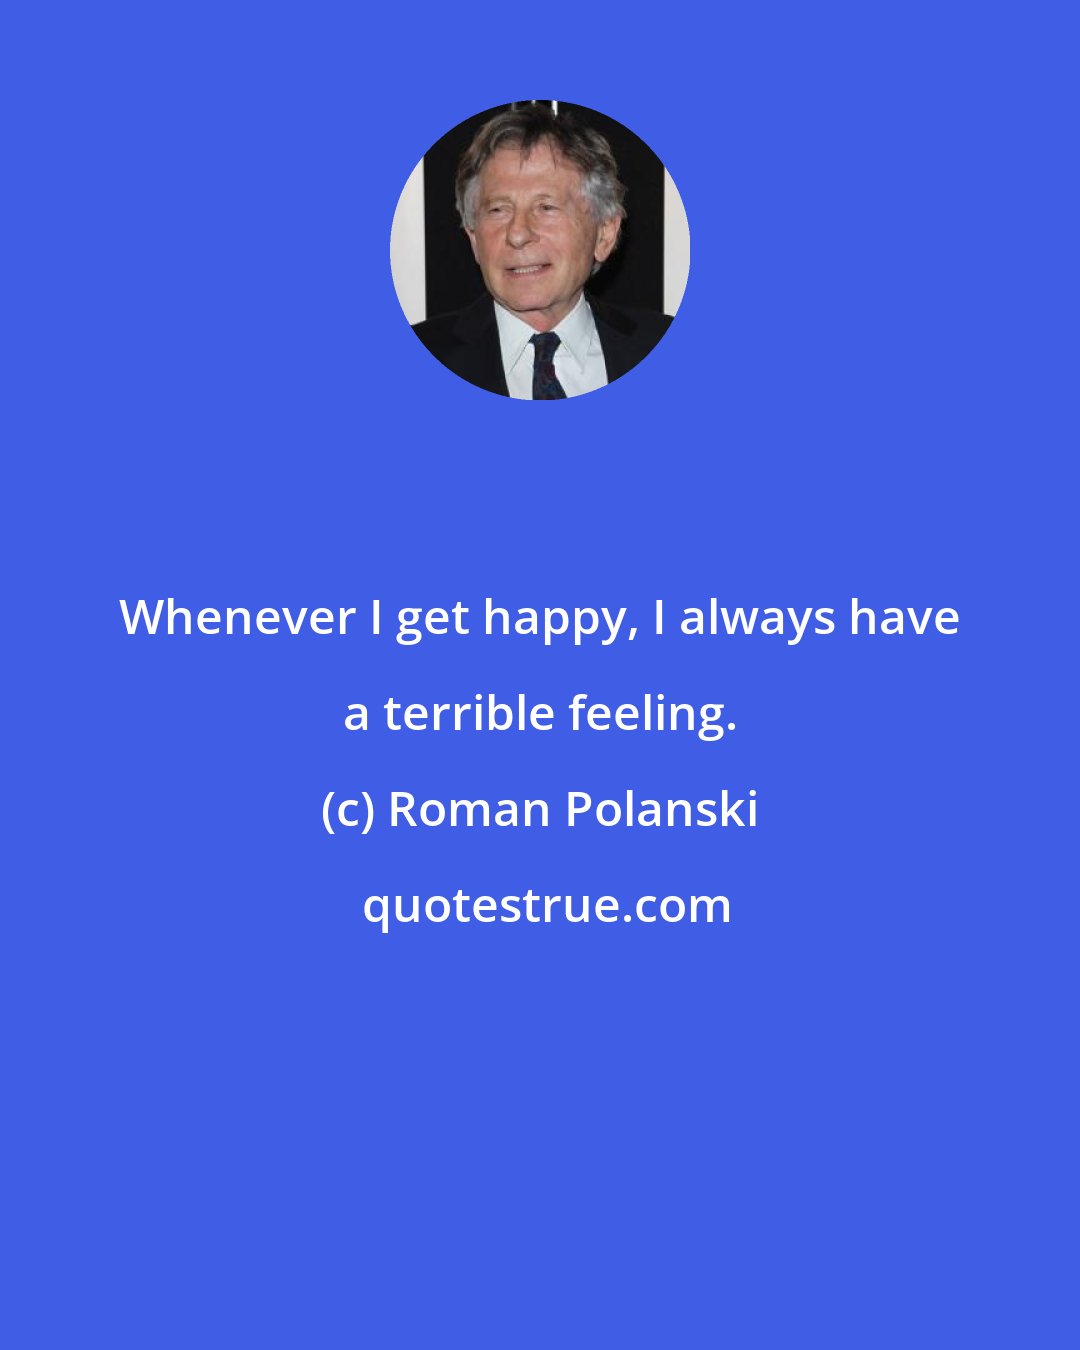 Roman Polanski: Whenever I get happy, I always have a terrible feeling.